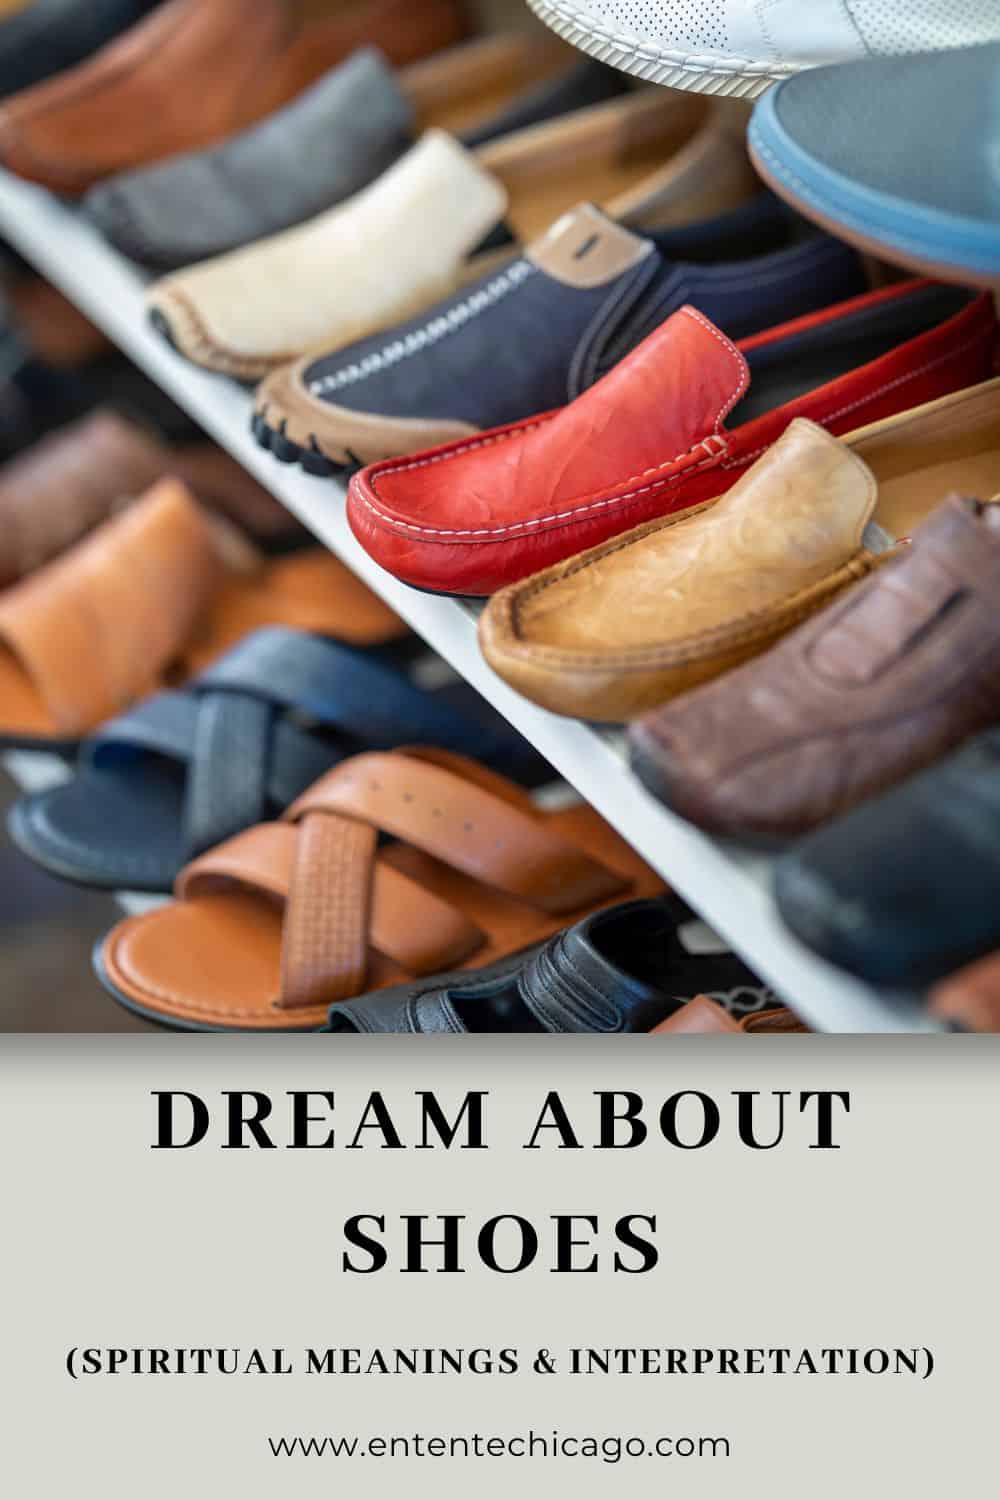 General Interpretations of Dreams About Shoes